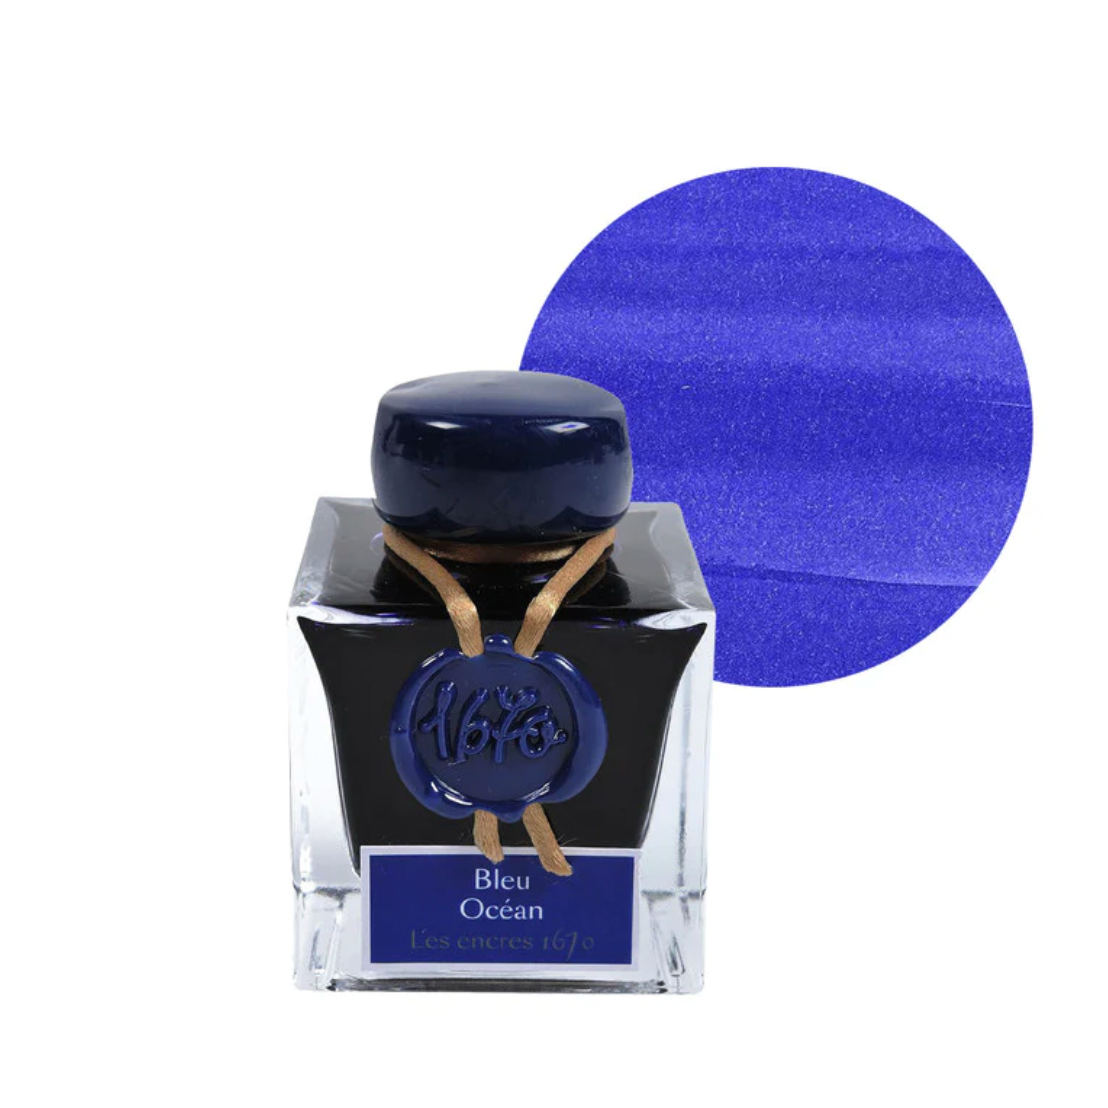 Jacques Herbin Prestige -1670 Collection Fountain Pen Ink - Bleu Ocean (Ocean Blue) : 50ml